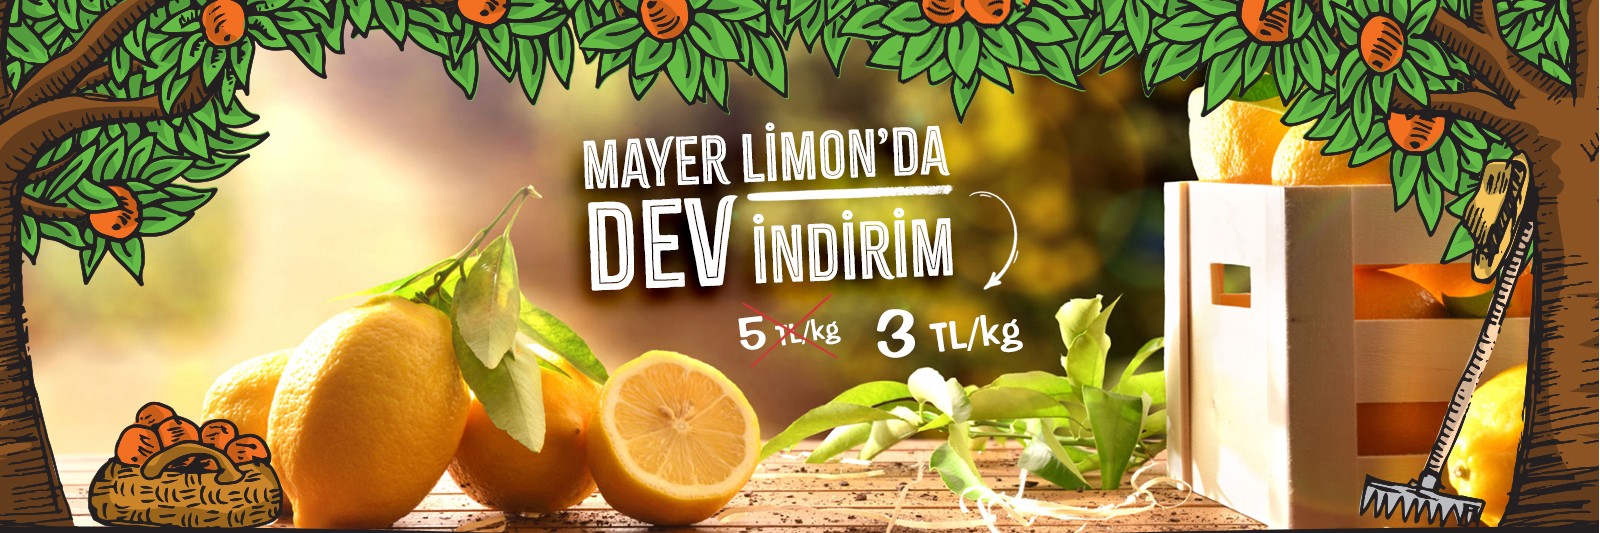 Mayer Limon